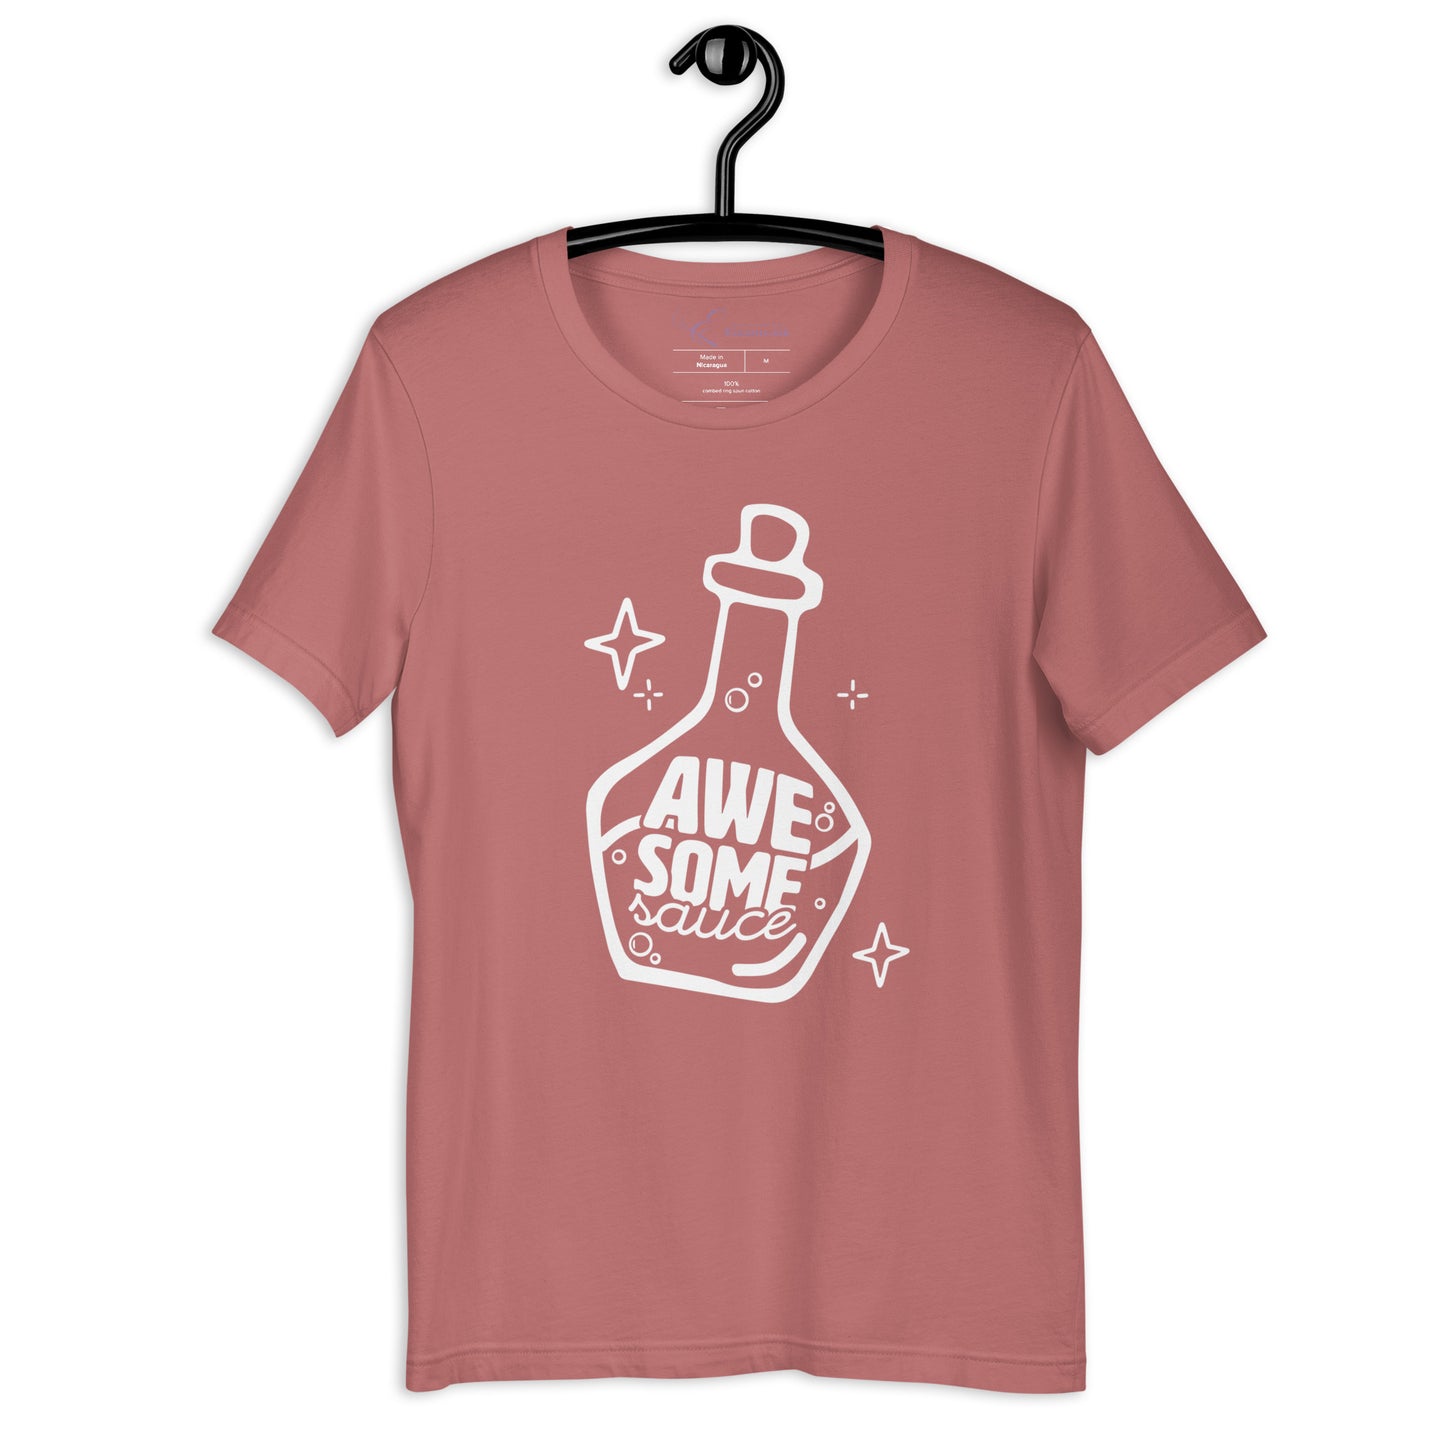 Awesome Sauce - Unisex t-shirt